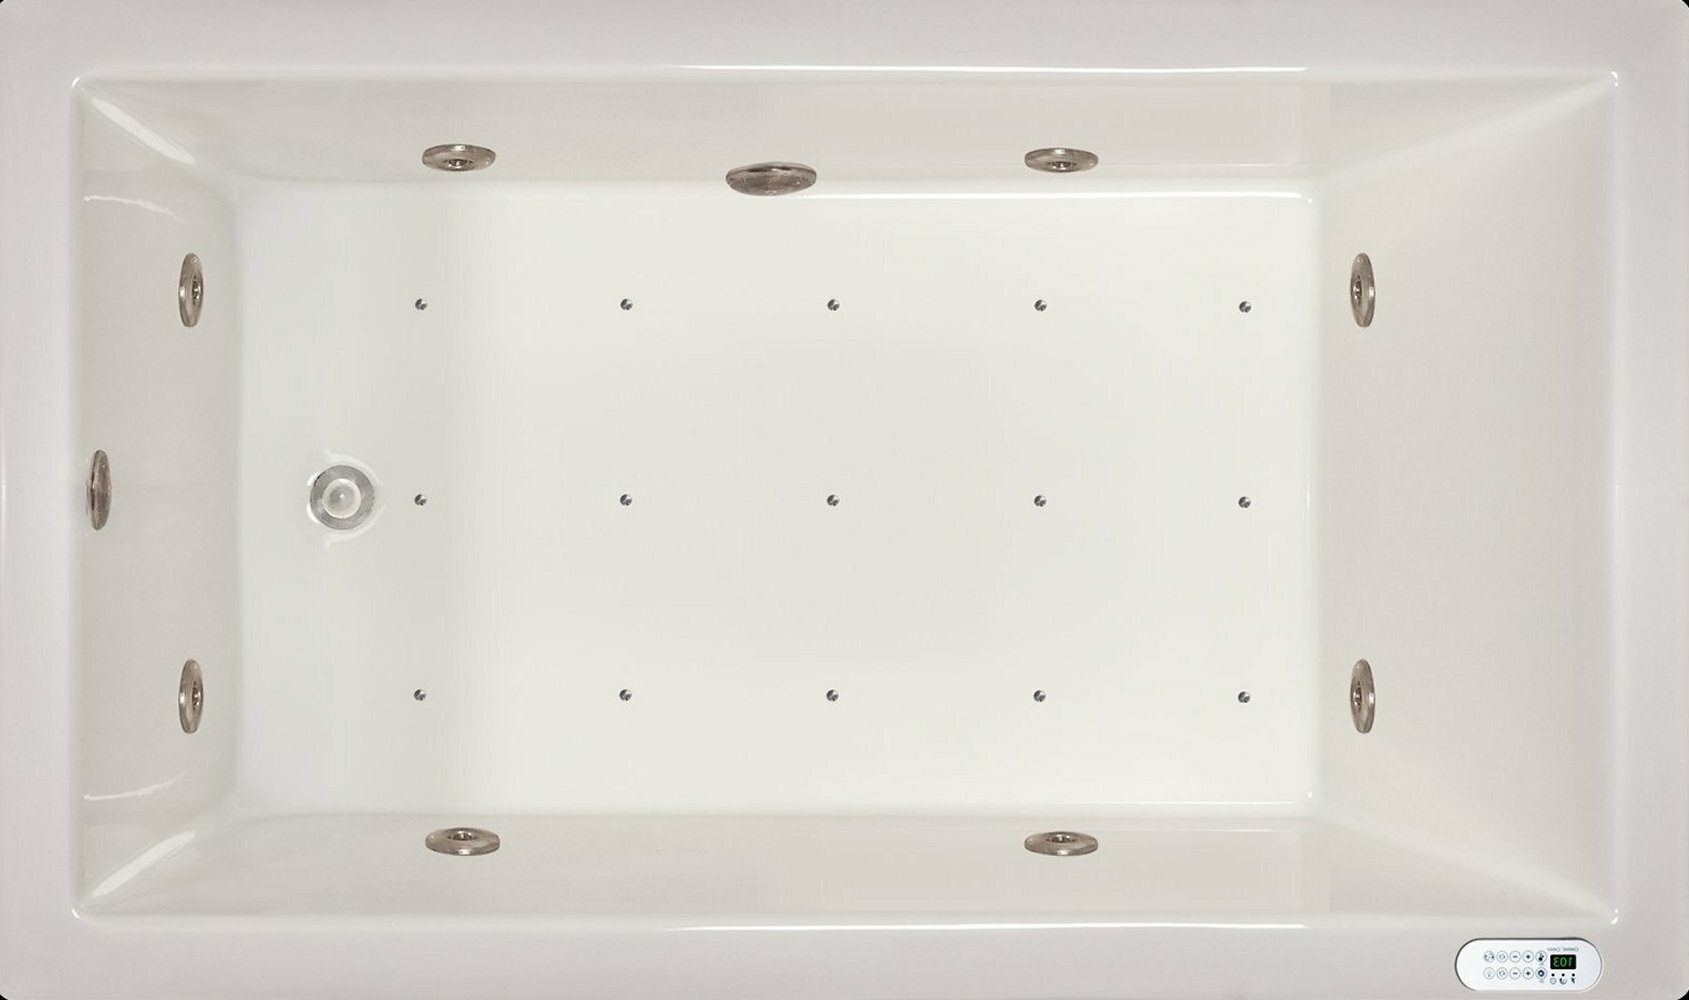 Signature Bath LPI228-C-RD Drop-In Air & Whirlpool Bathtub with Waterfall & Led Lighting Right Drain White